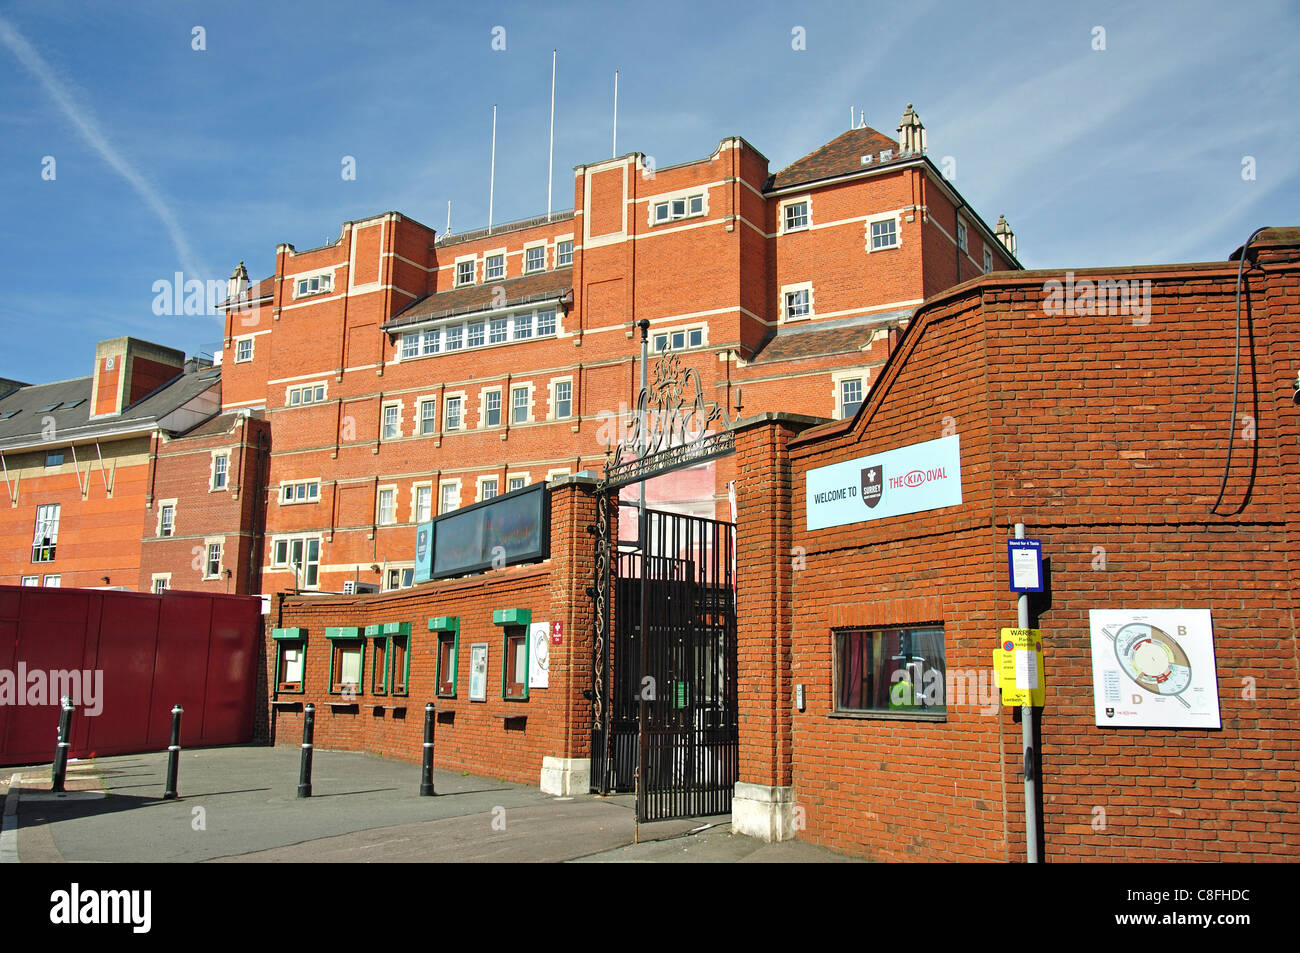 L'Oval Cricket Ground, Kennington, London Borough of Lambeth, London, Greater London, Angleterre, Royaume-Uni Banque D'Images